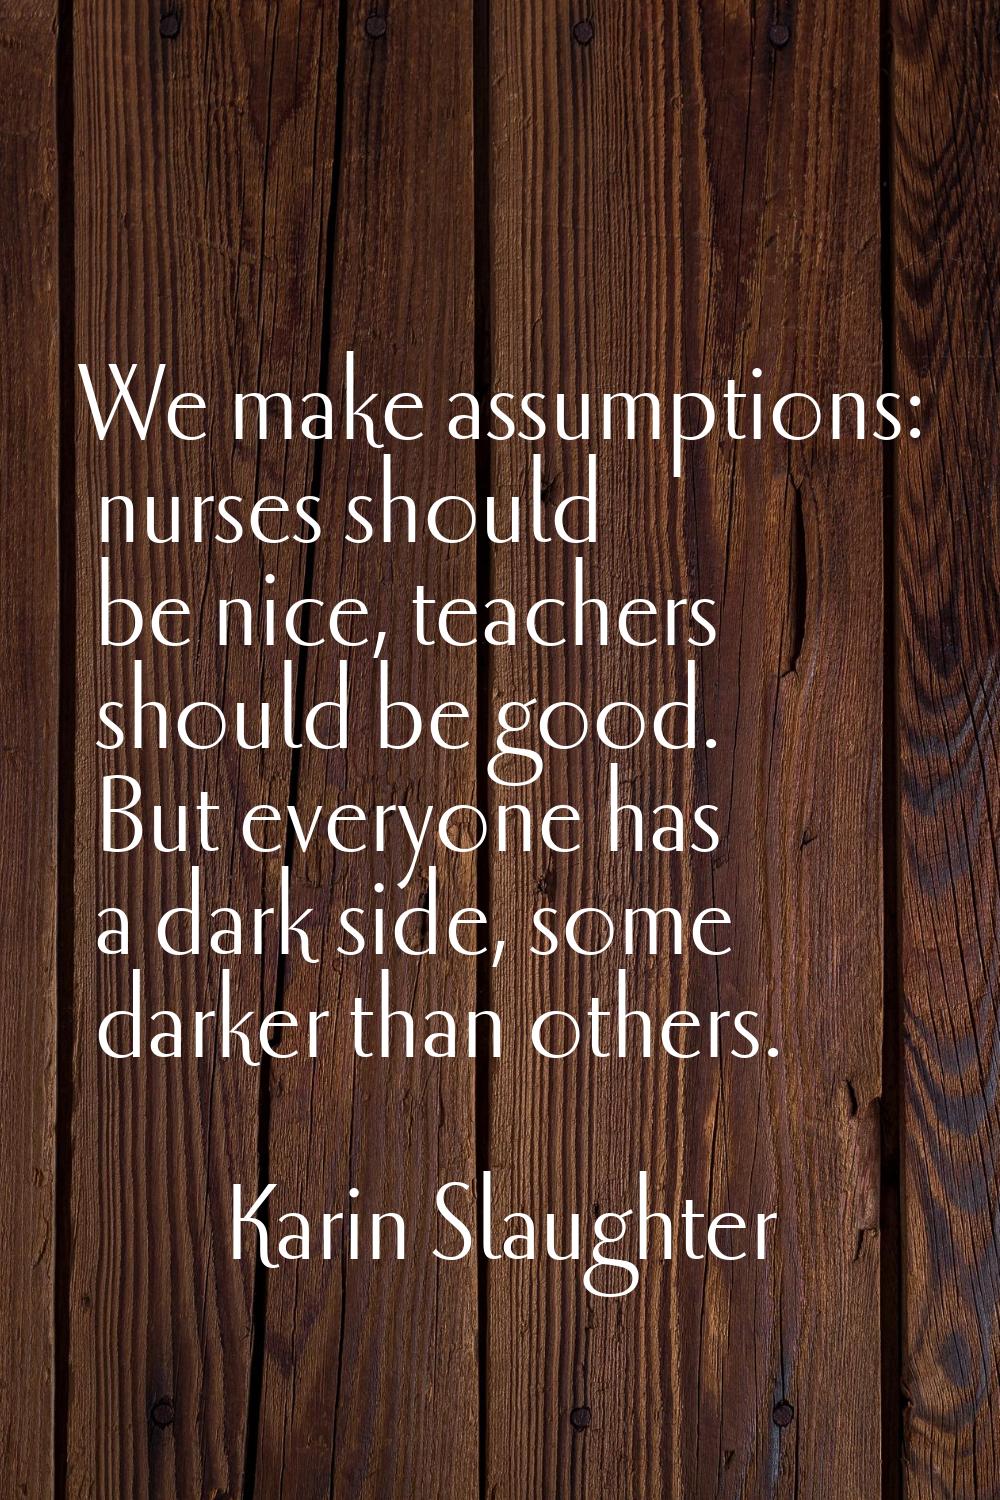 We make assumptions: nurses should be nice, teachers should be good. But everyone has a dark side, 